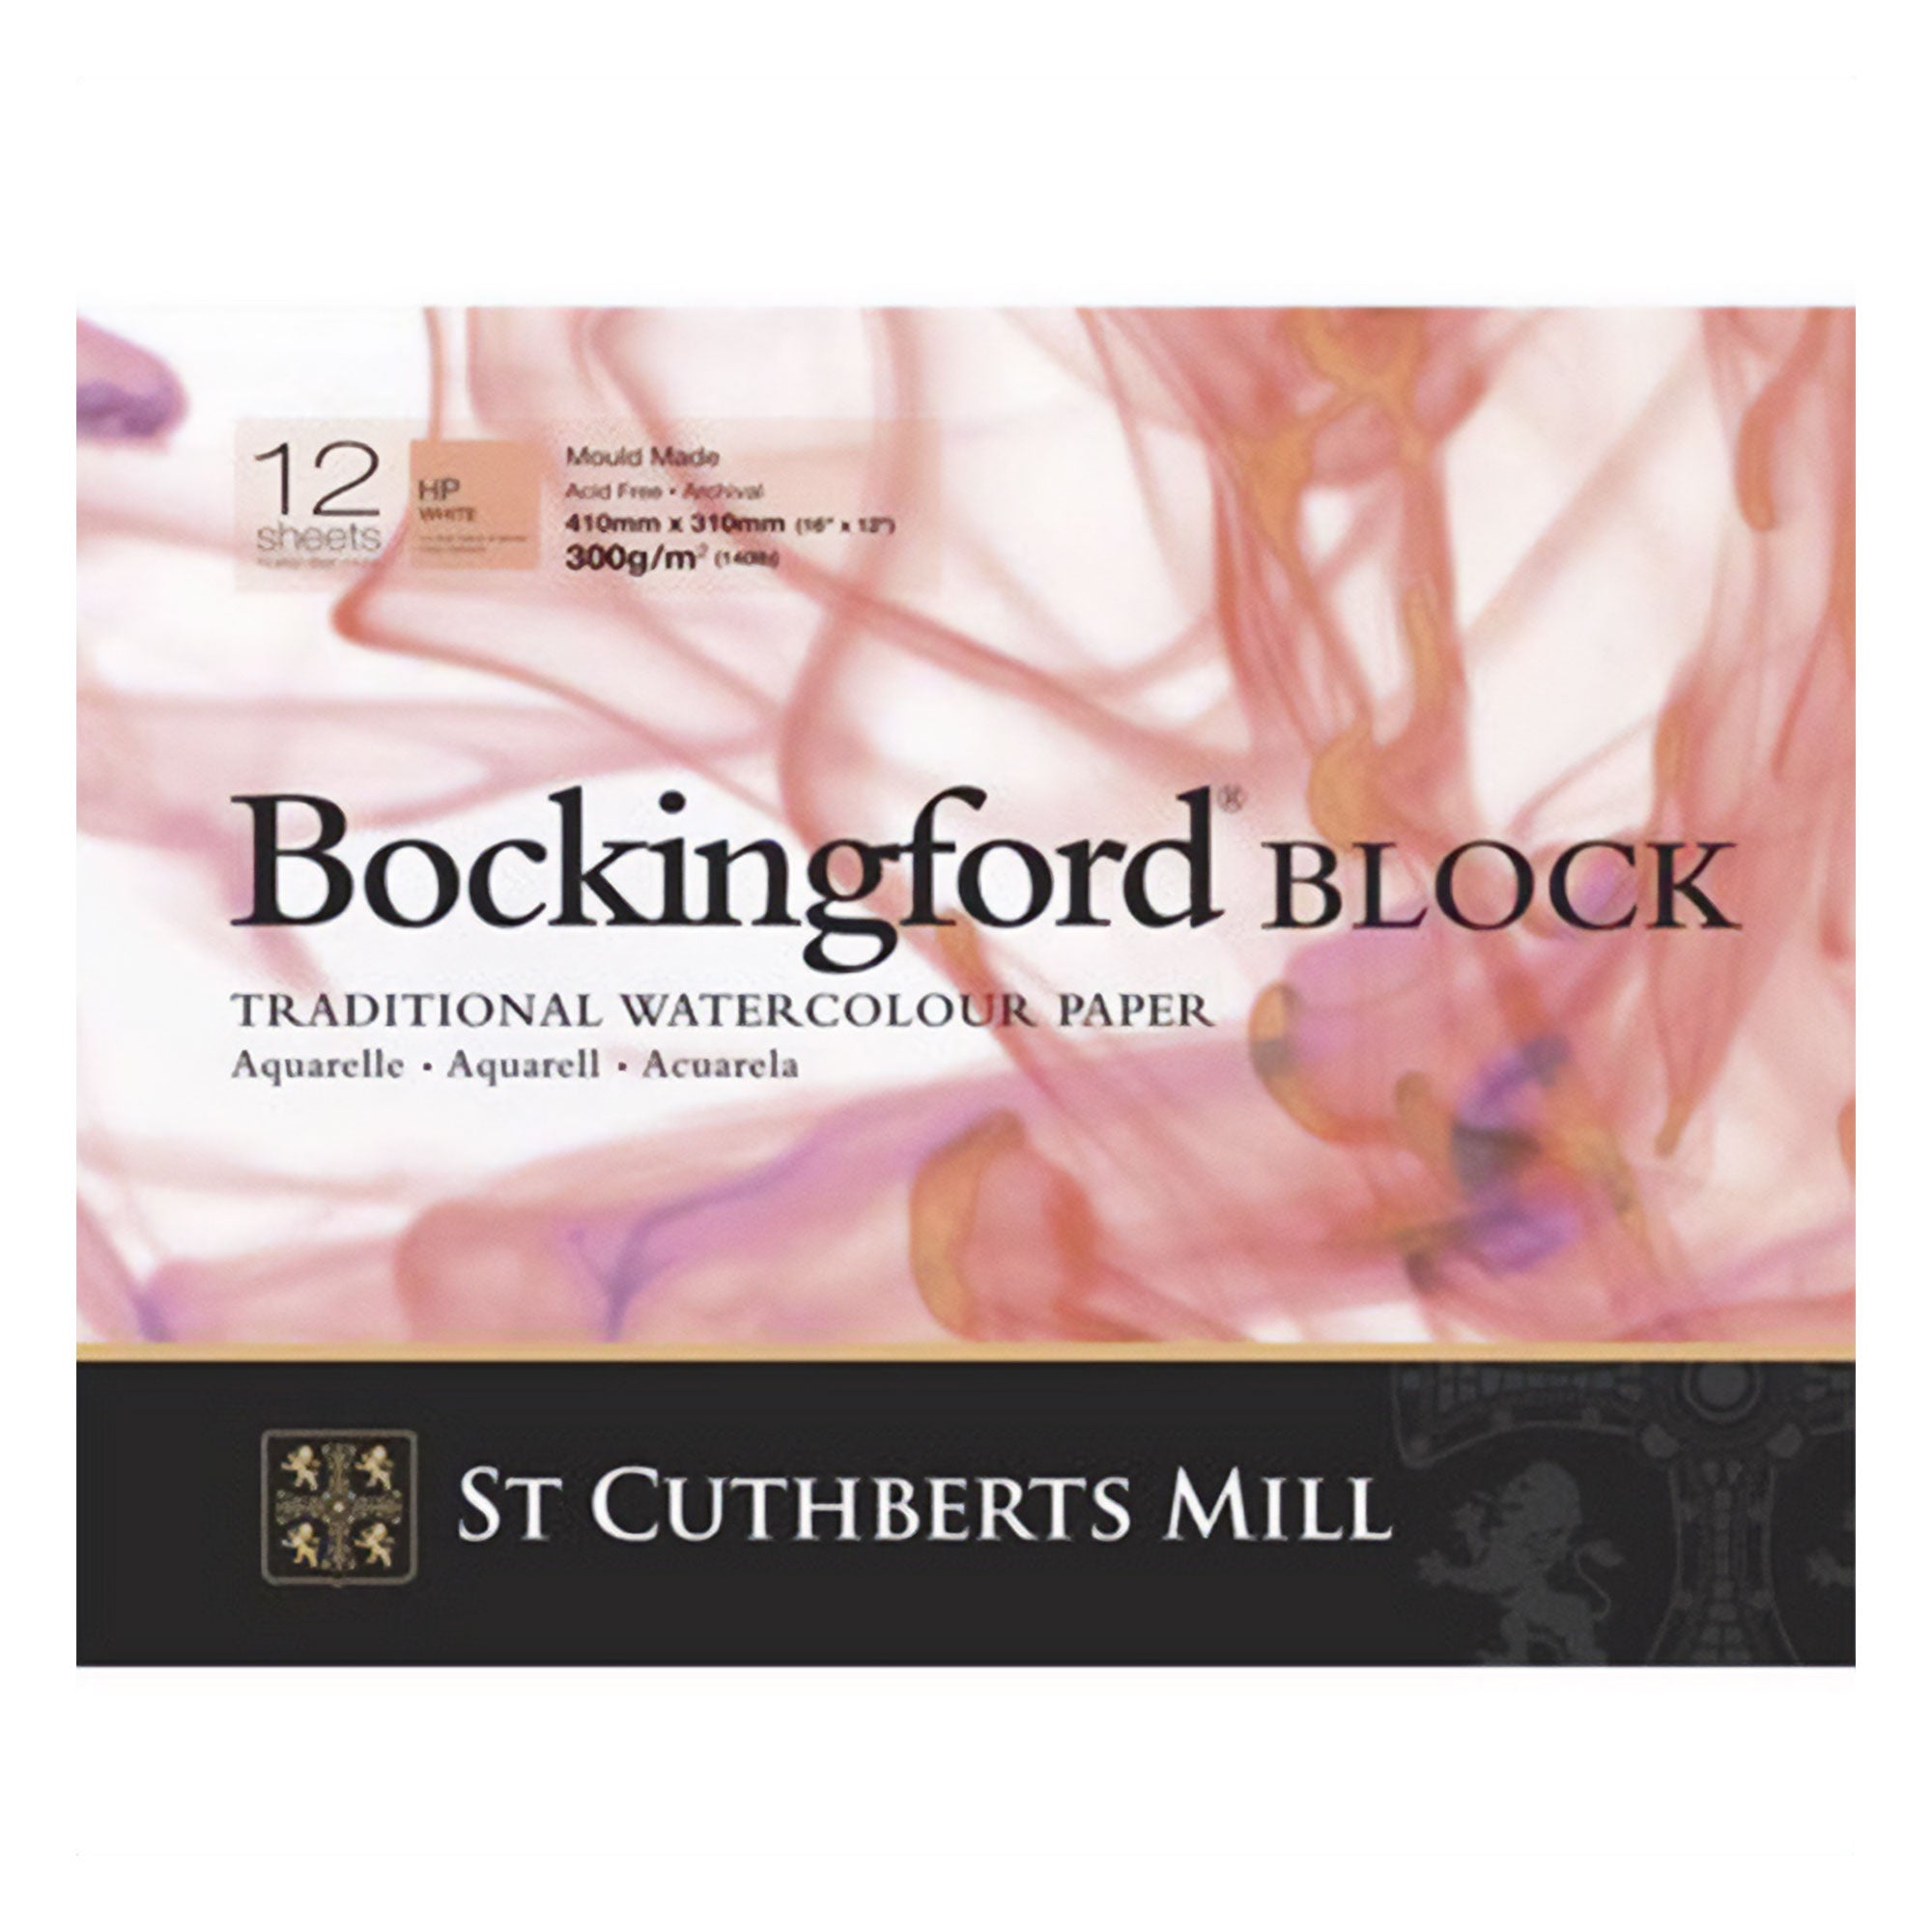 St Cuthberts Mill Bockingford Watercolour Blocks & Sheets